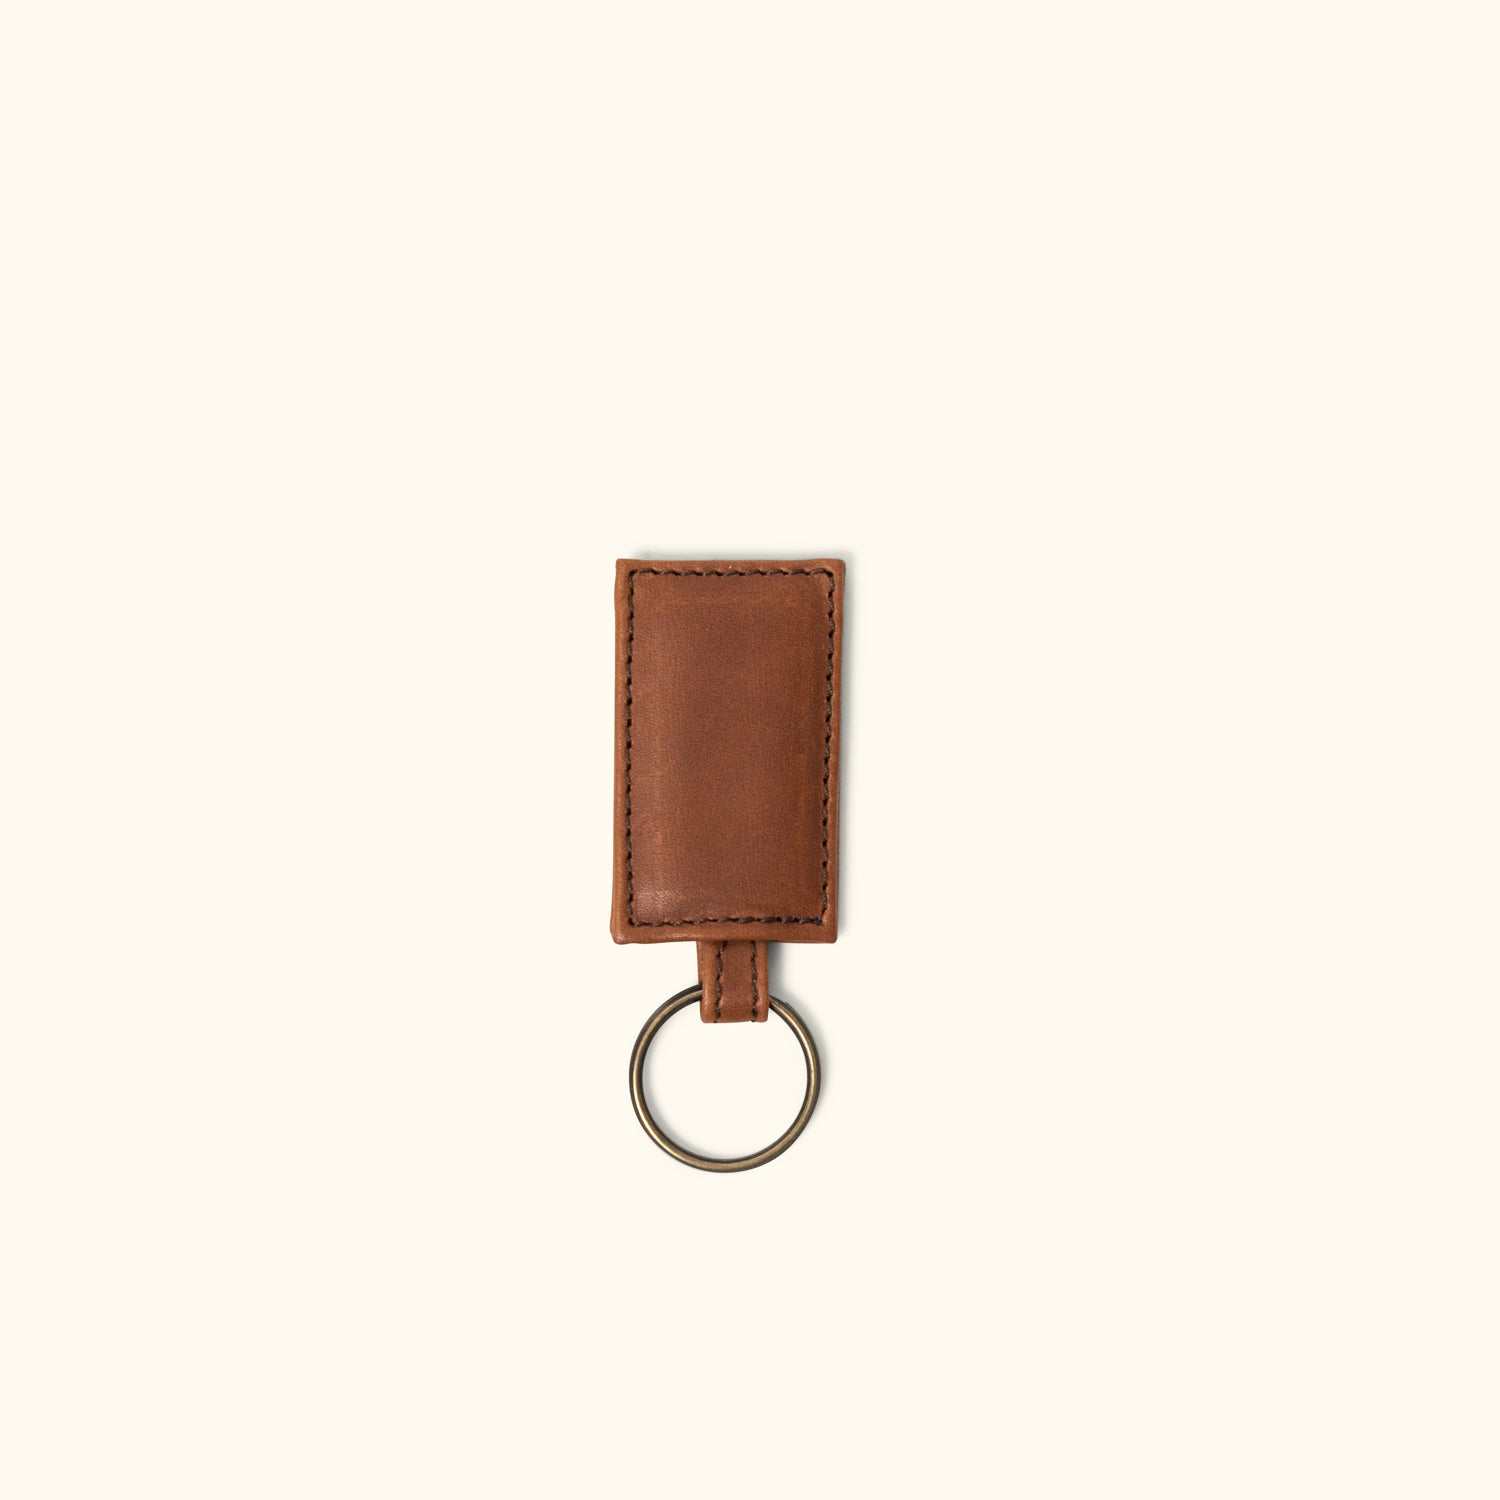 88119 Zip Code Stamped Leather Keychain Key Fob Black – Tangerine Fox Market